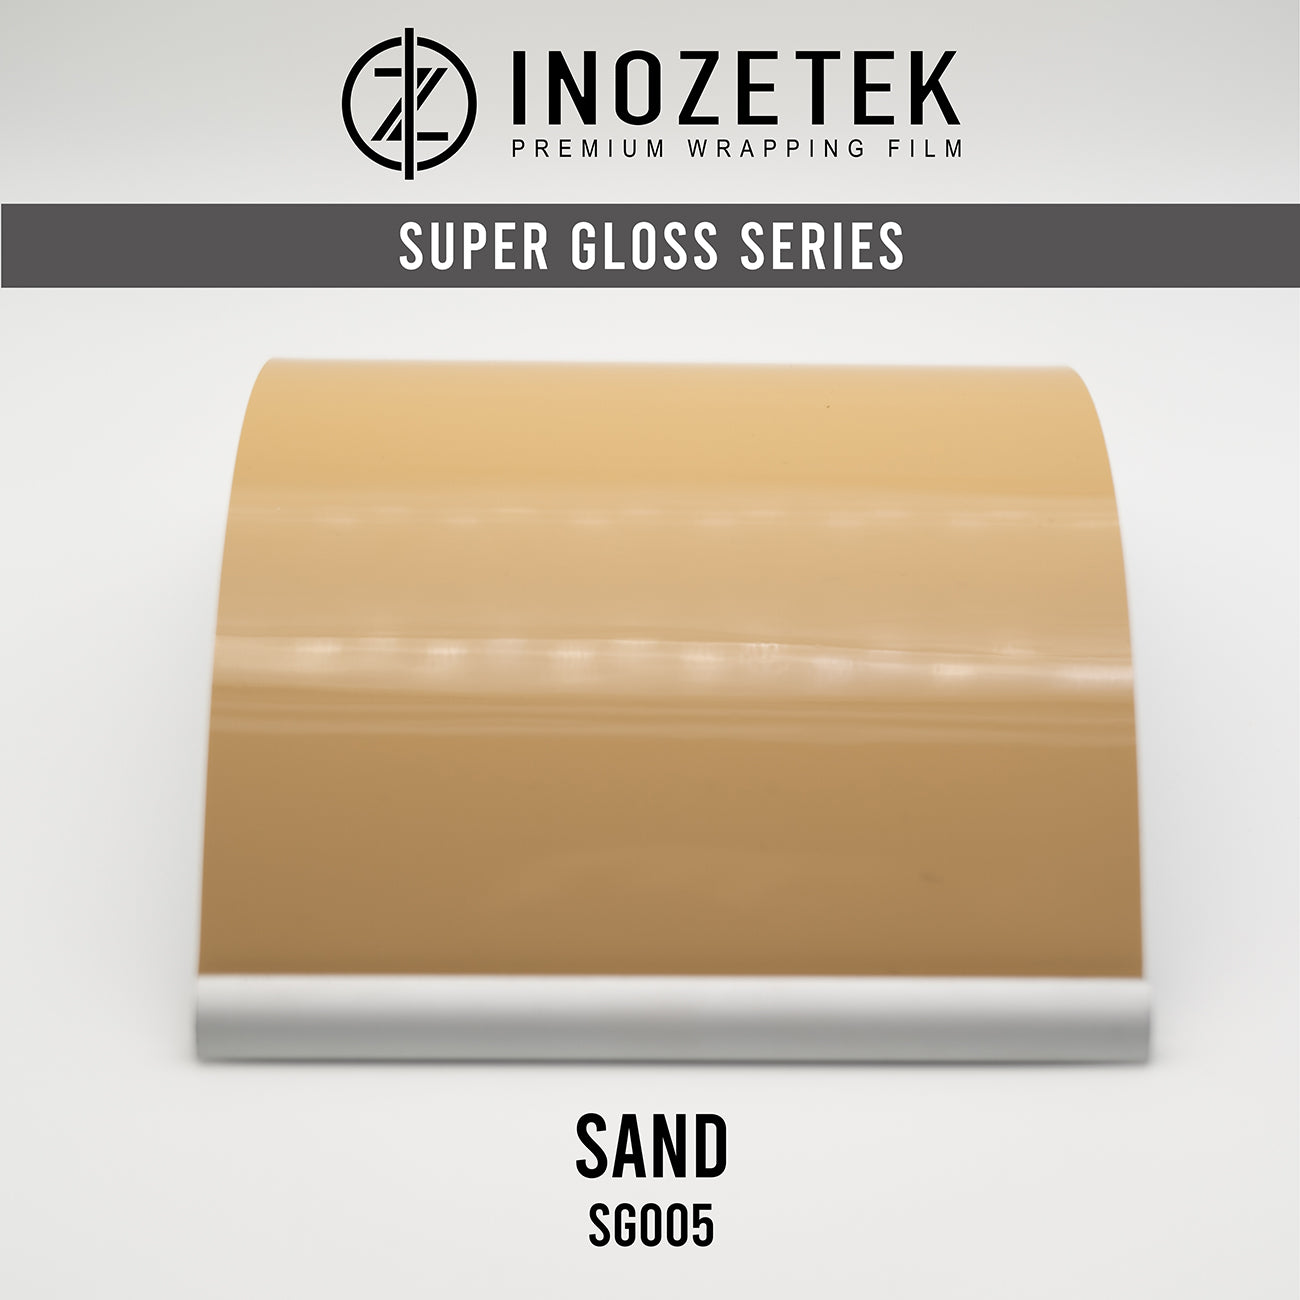 Super Gloss Sand - Inozetek USA